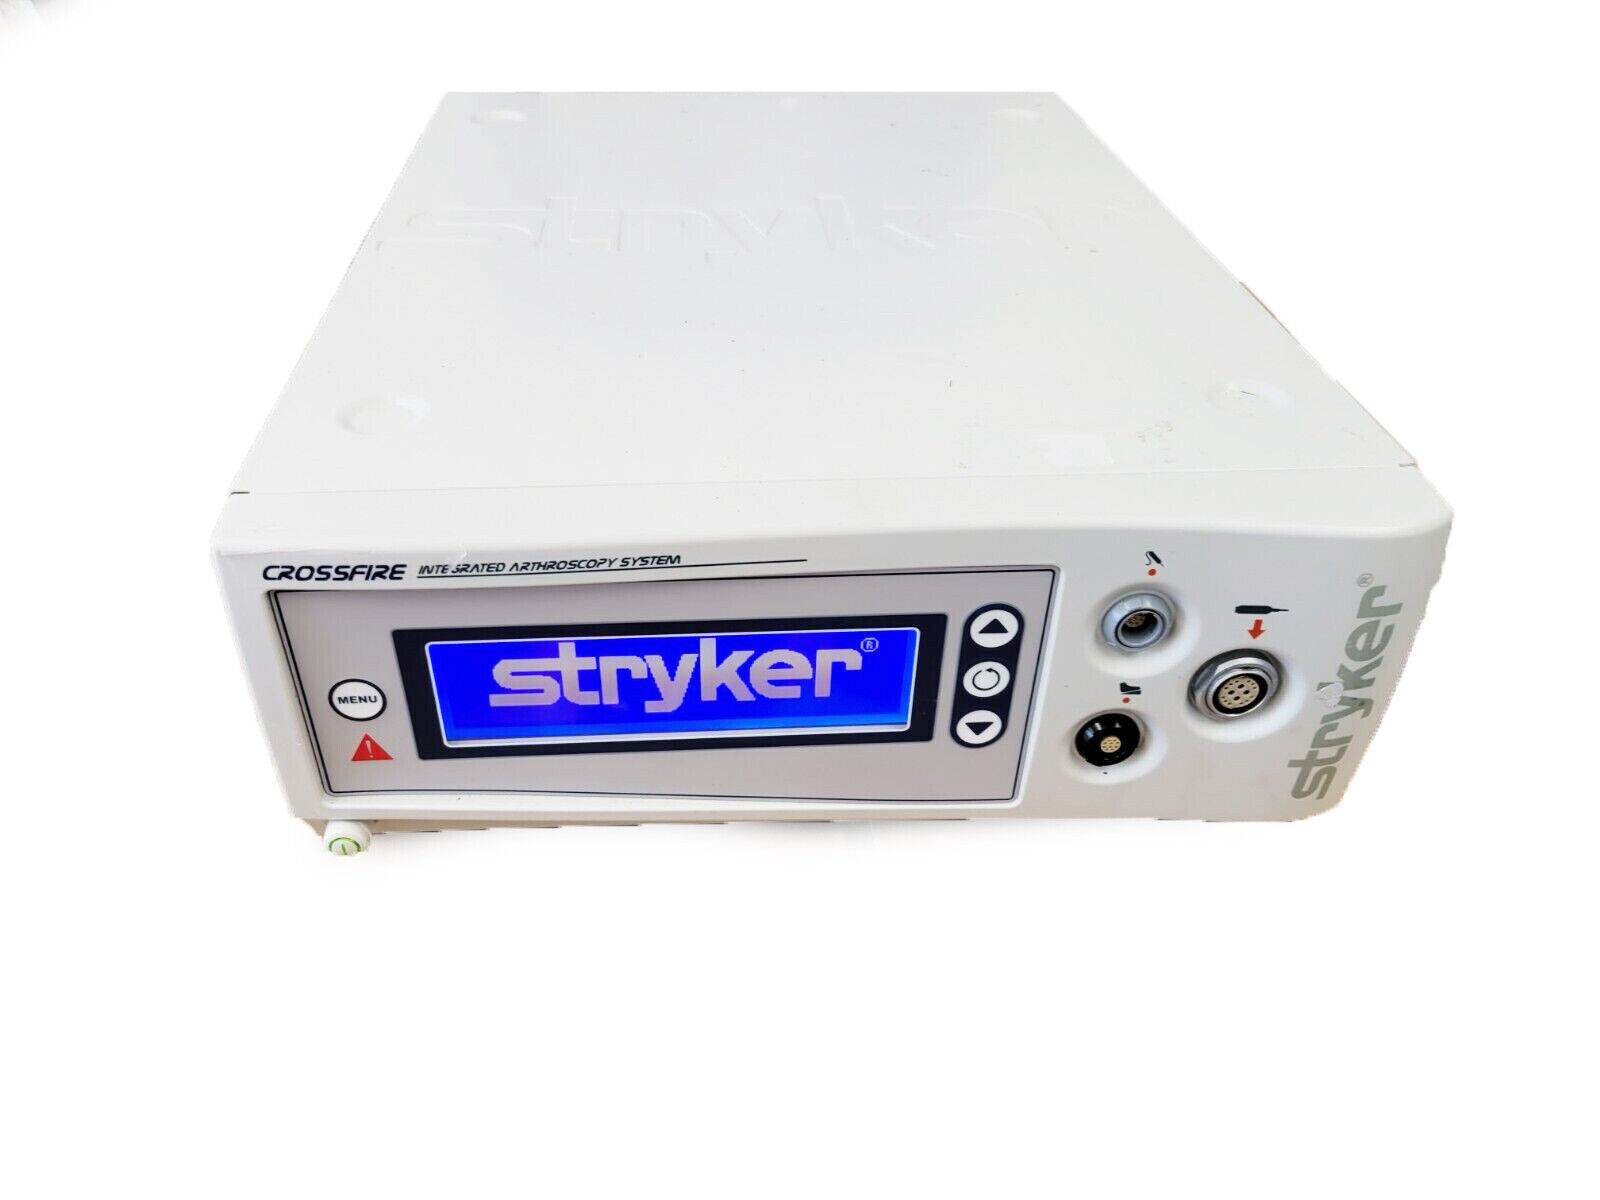 Stryker Crossfire Integrated Arthroscopy Console